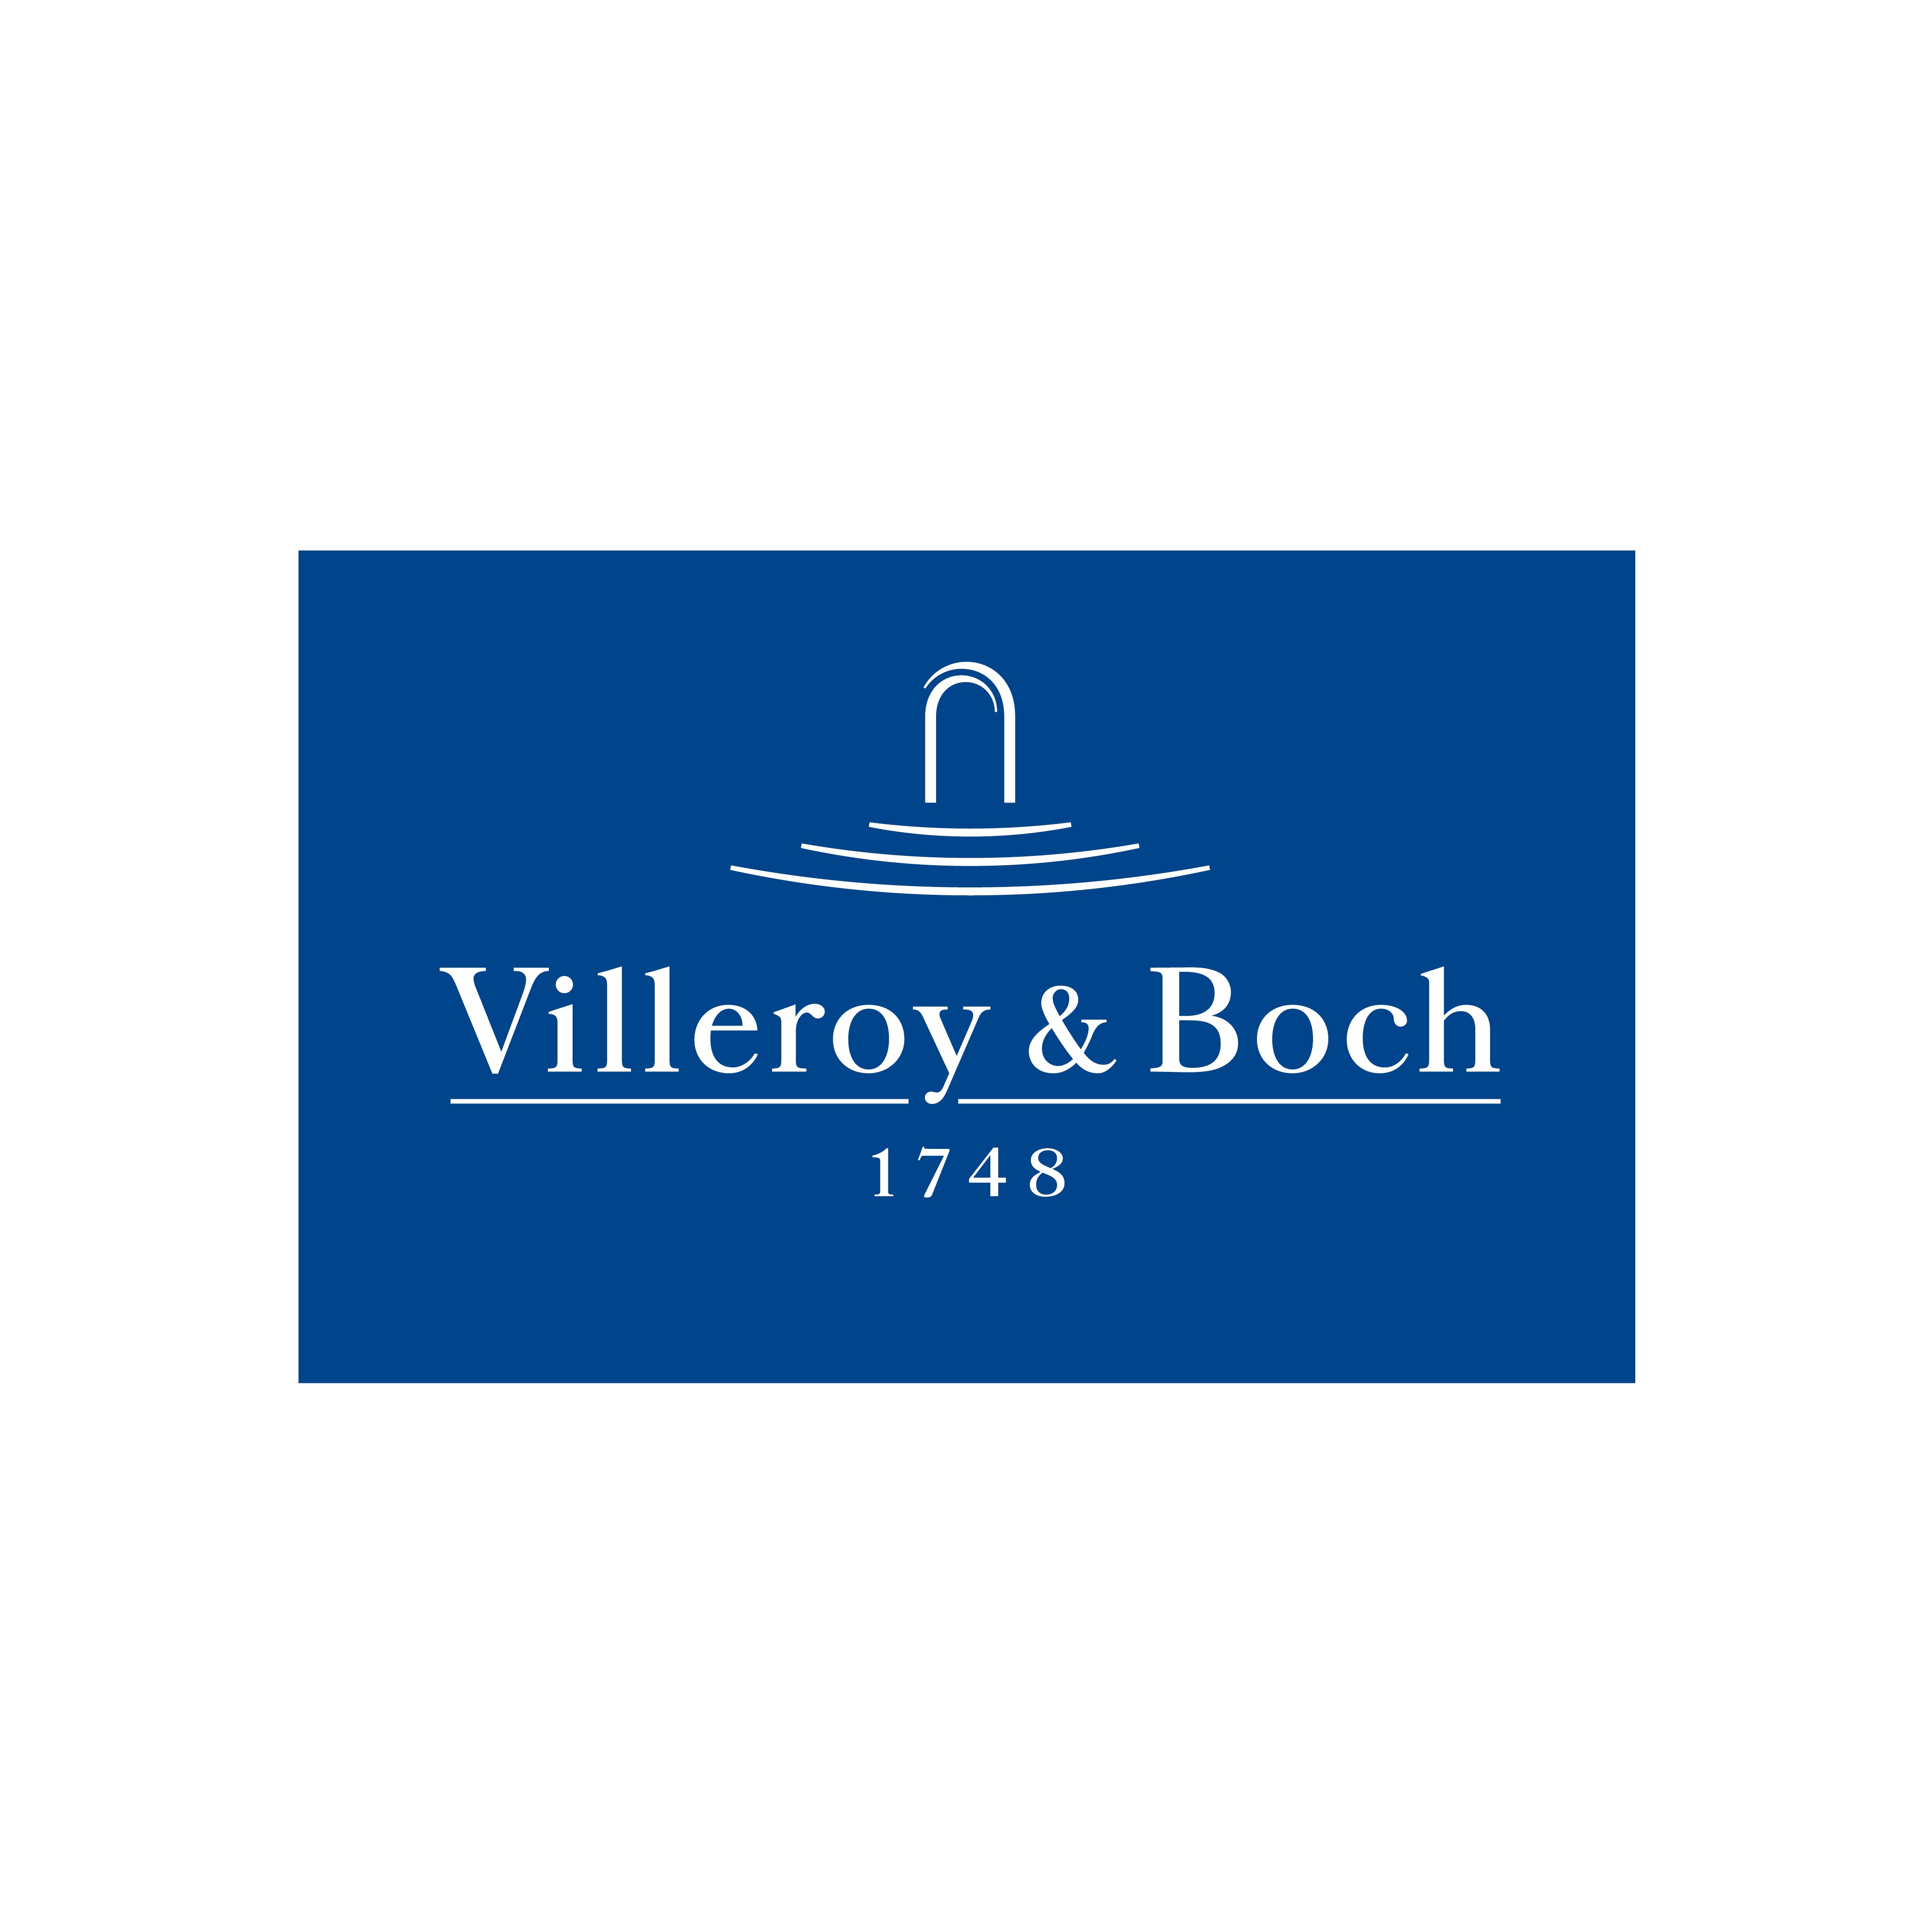 Villeroy & Boch Toilets